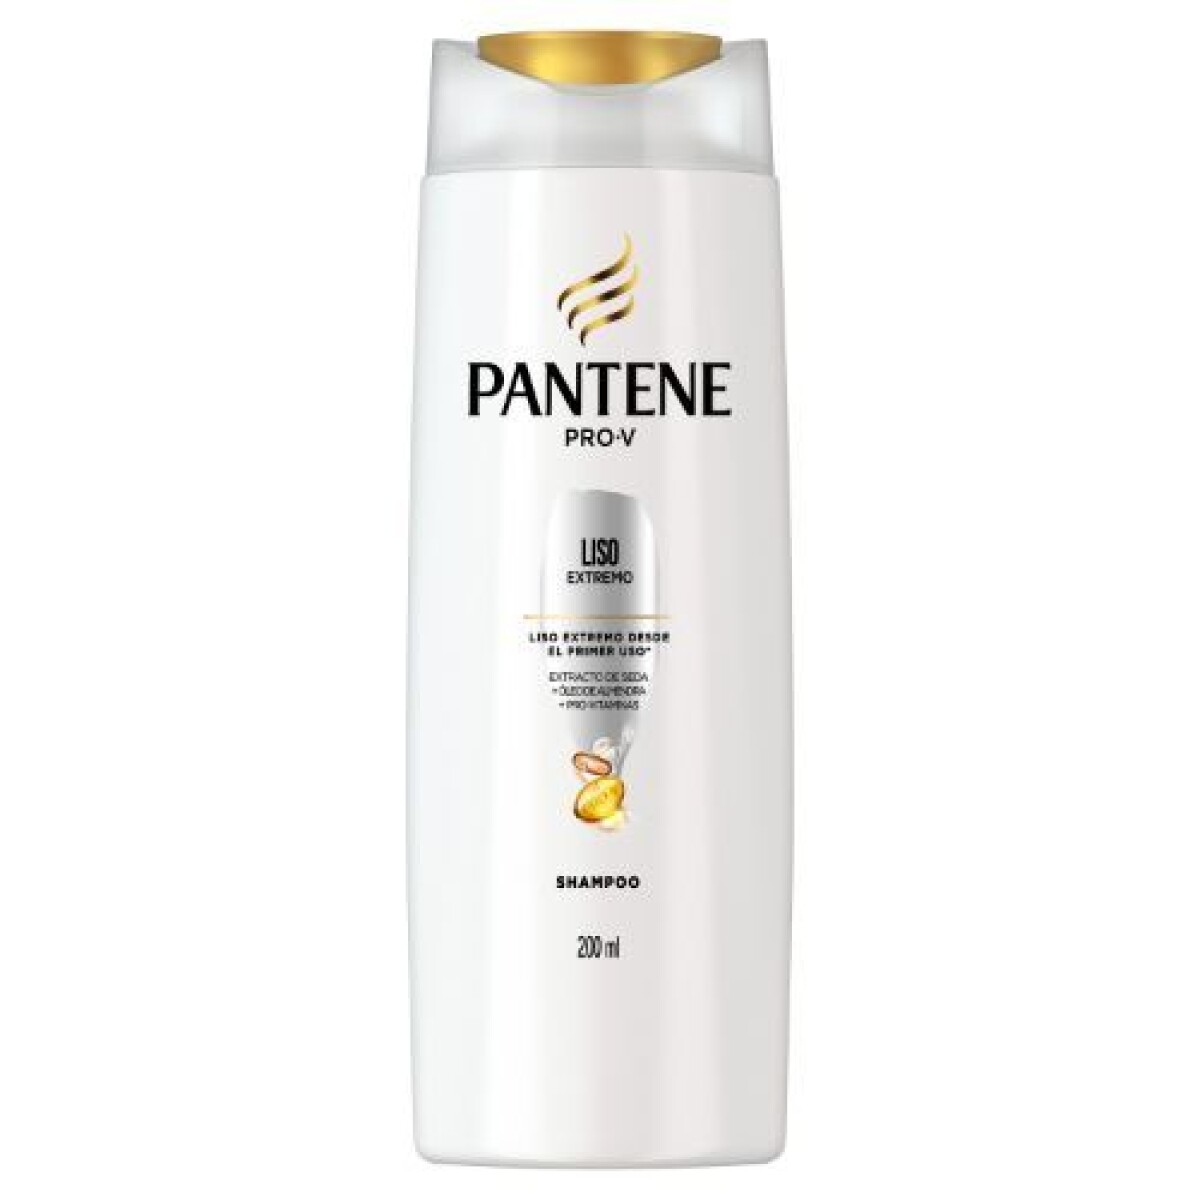 Pantene Shampoo Liso Extreme 200ml 